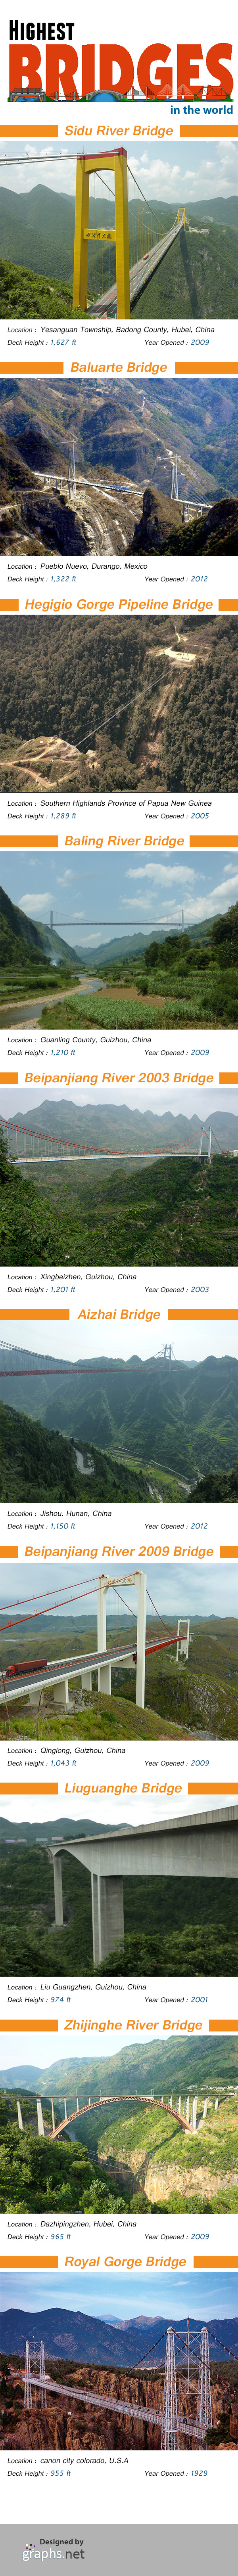 Highest Bridges in the World